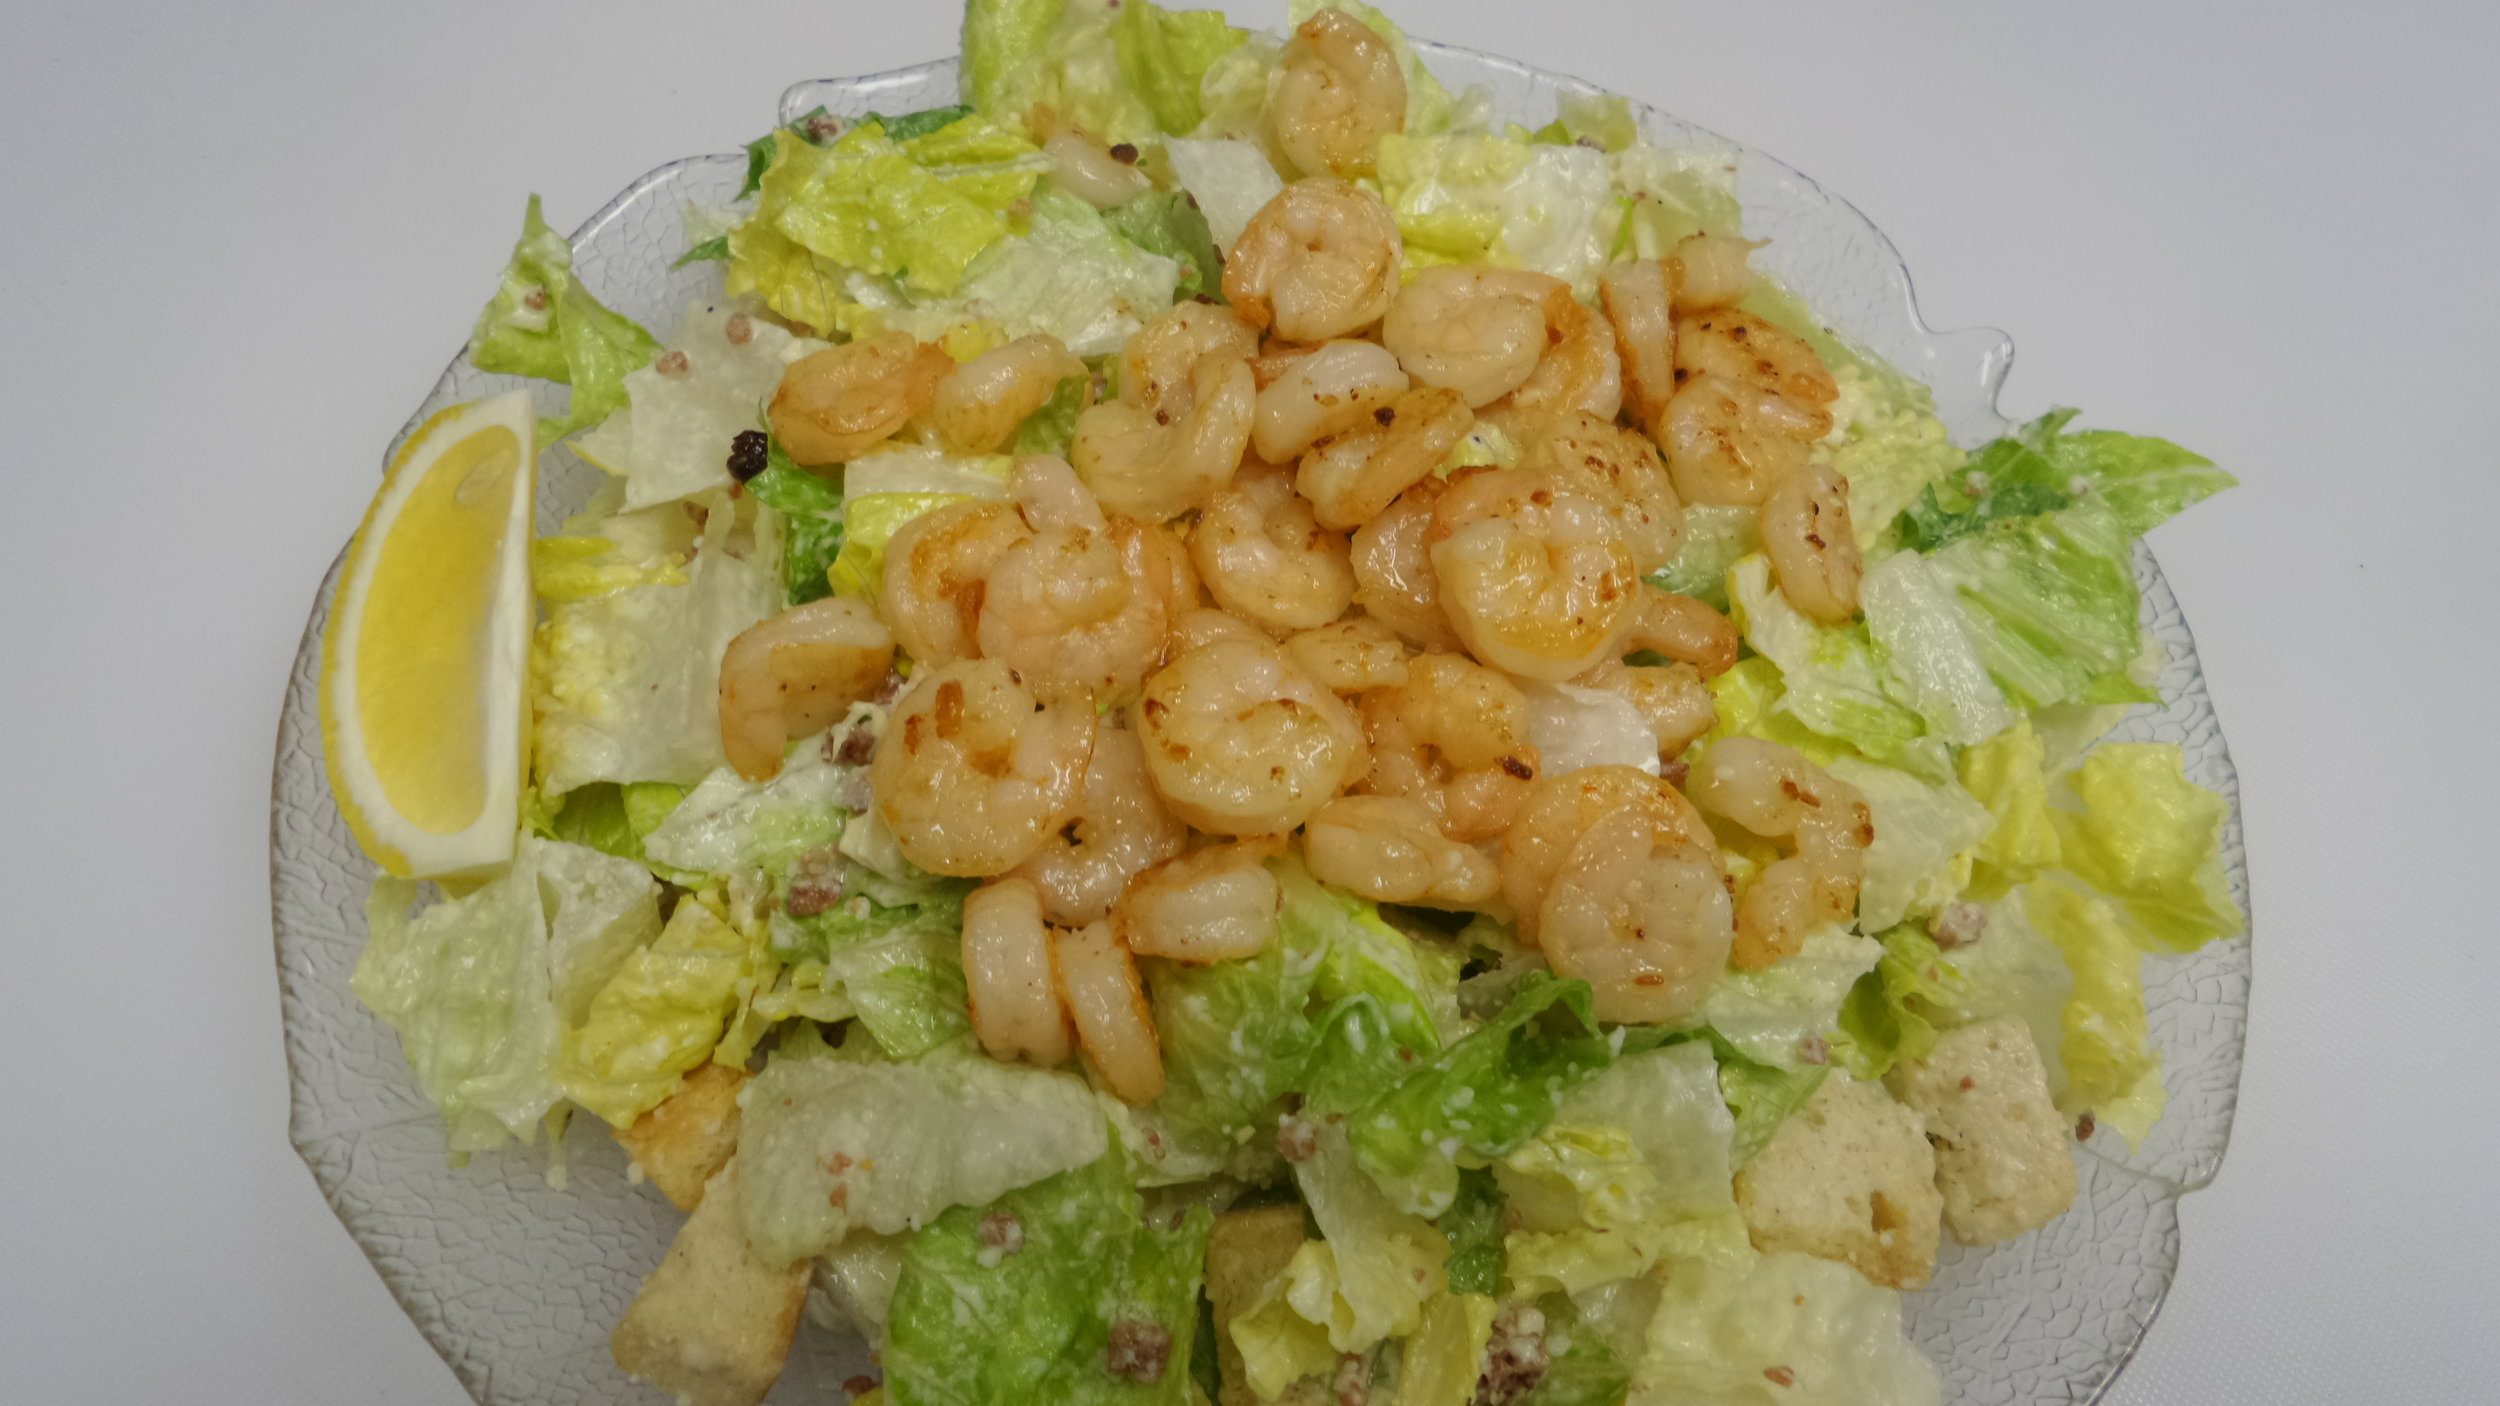  Pan Fried Shrimp on Caesar Salad  